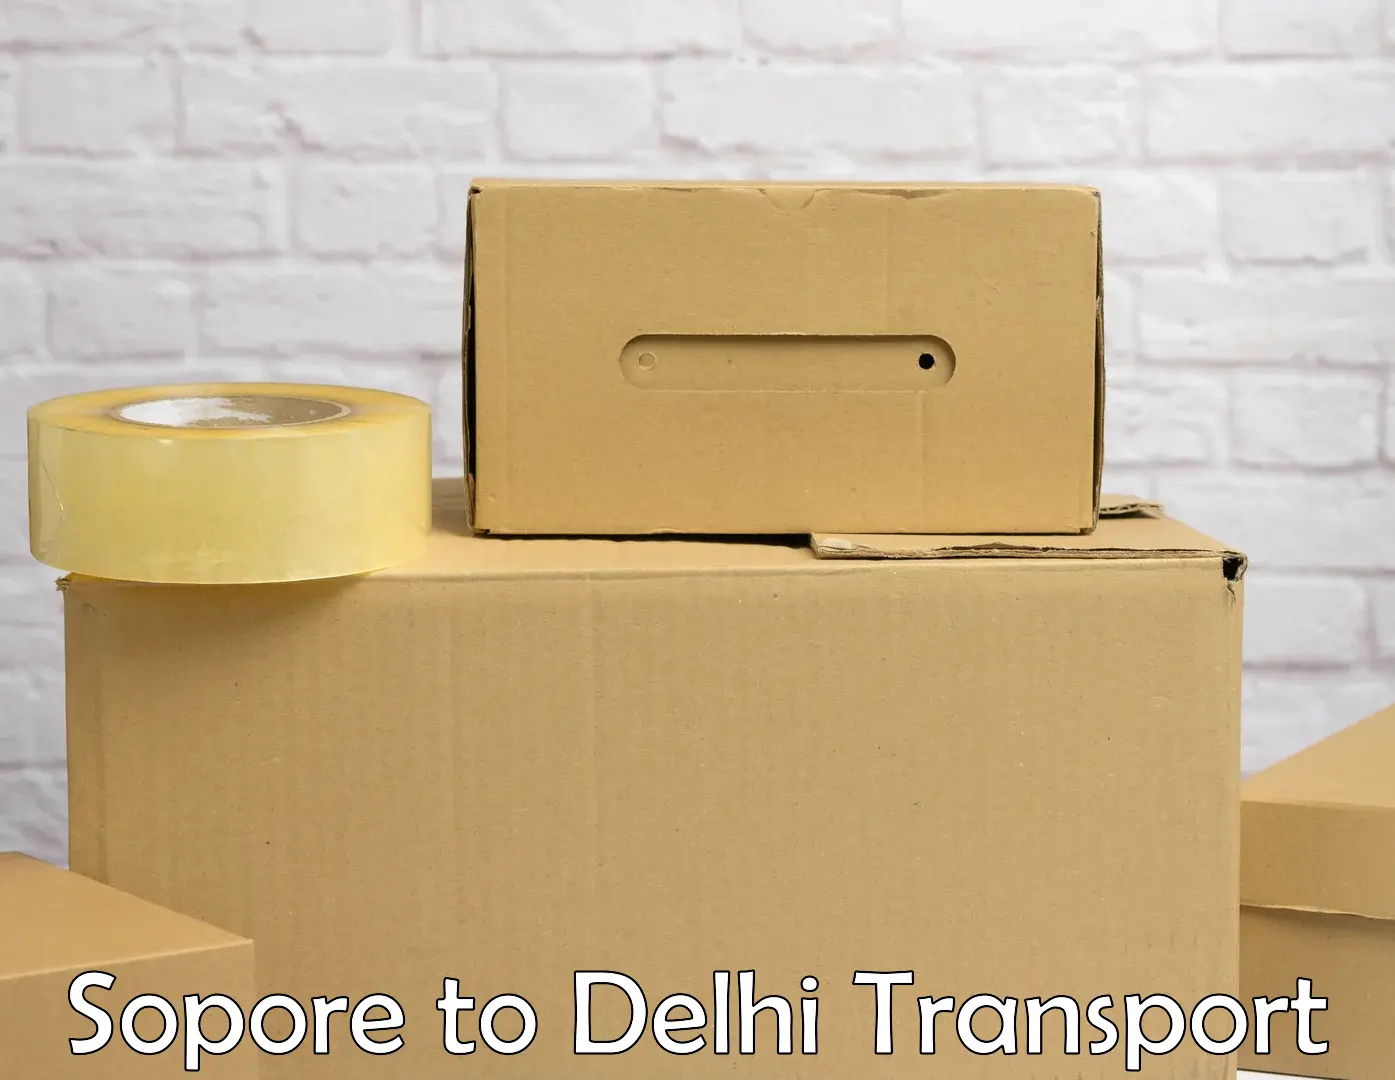 Cycle transportation service Sopore to Delhi